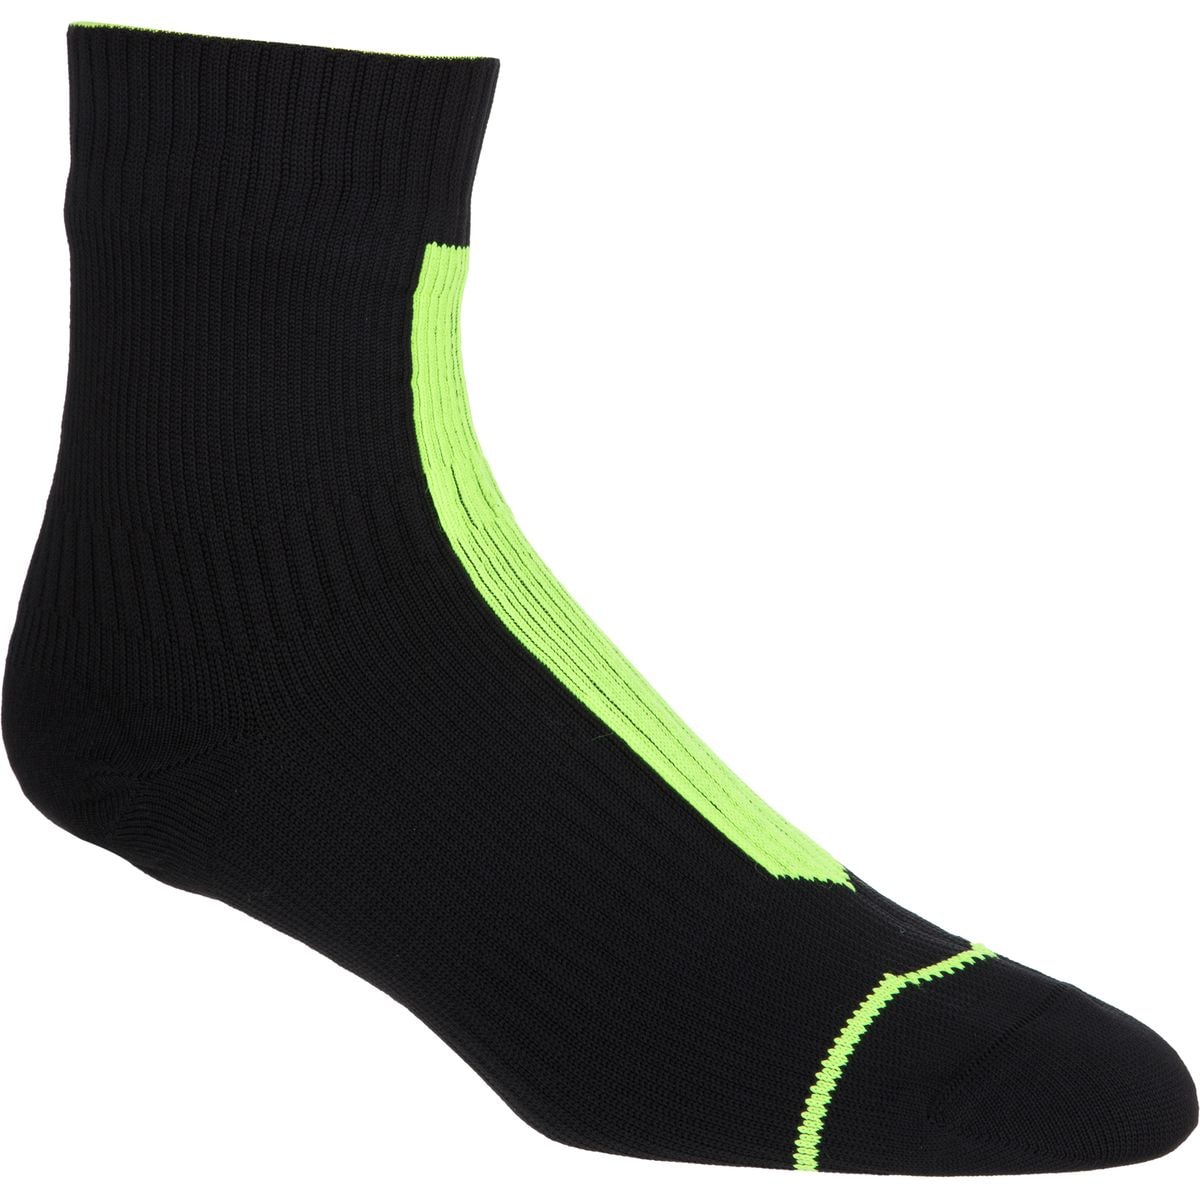 SealSkinz Road Ankle Sock with Hydrostop - Men's